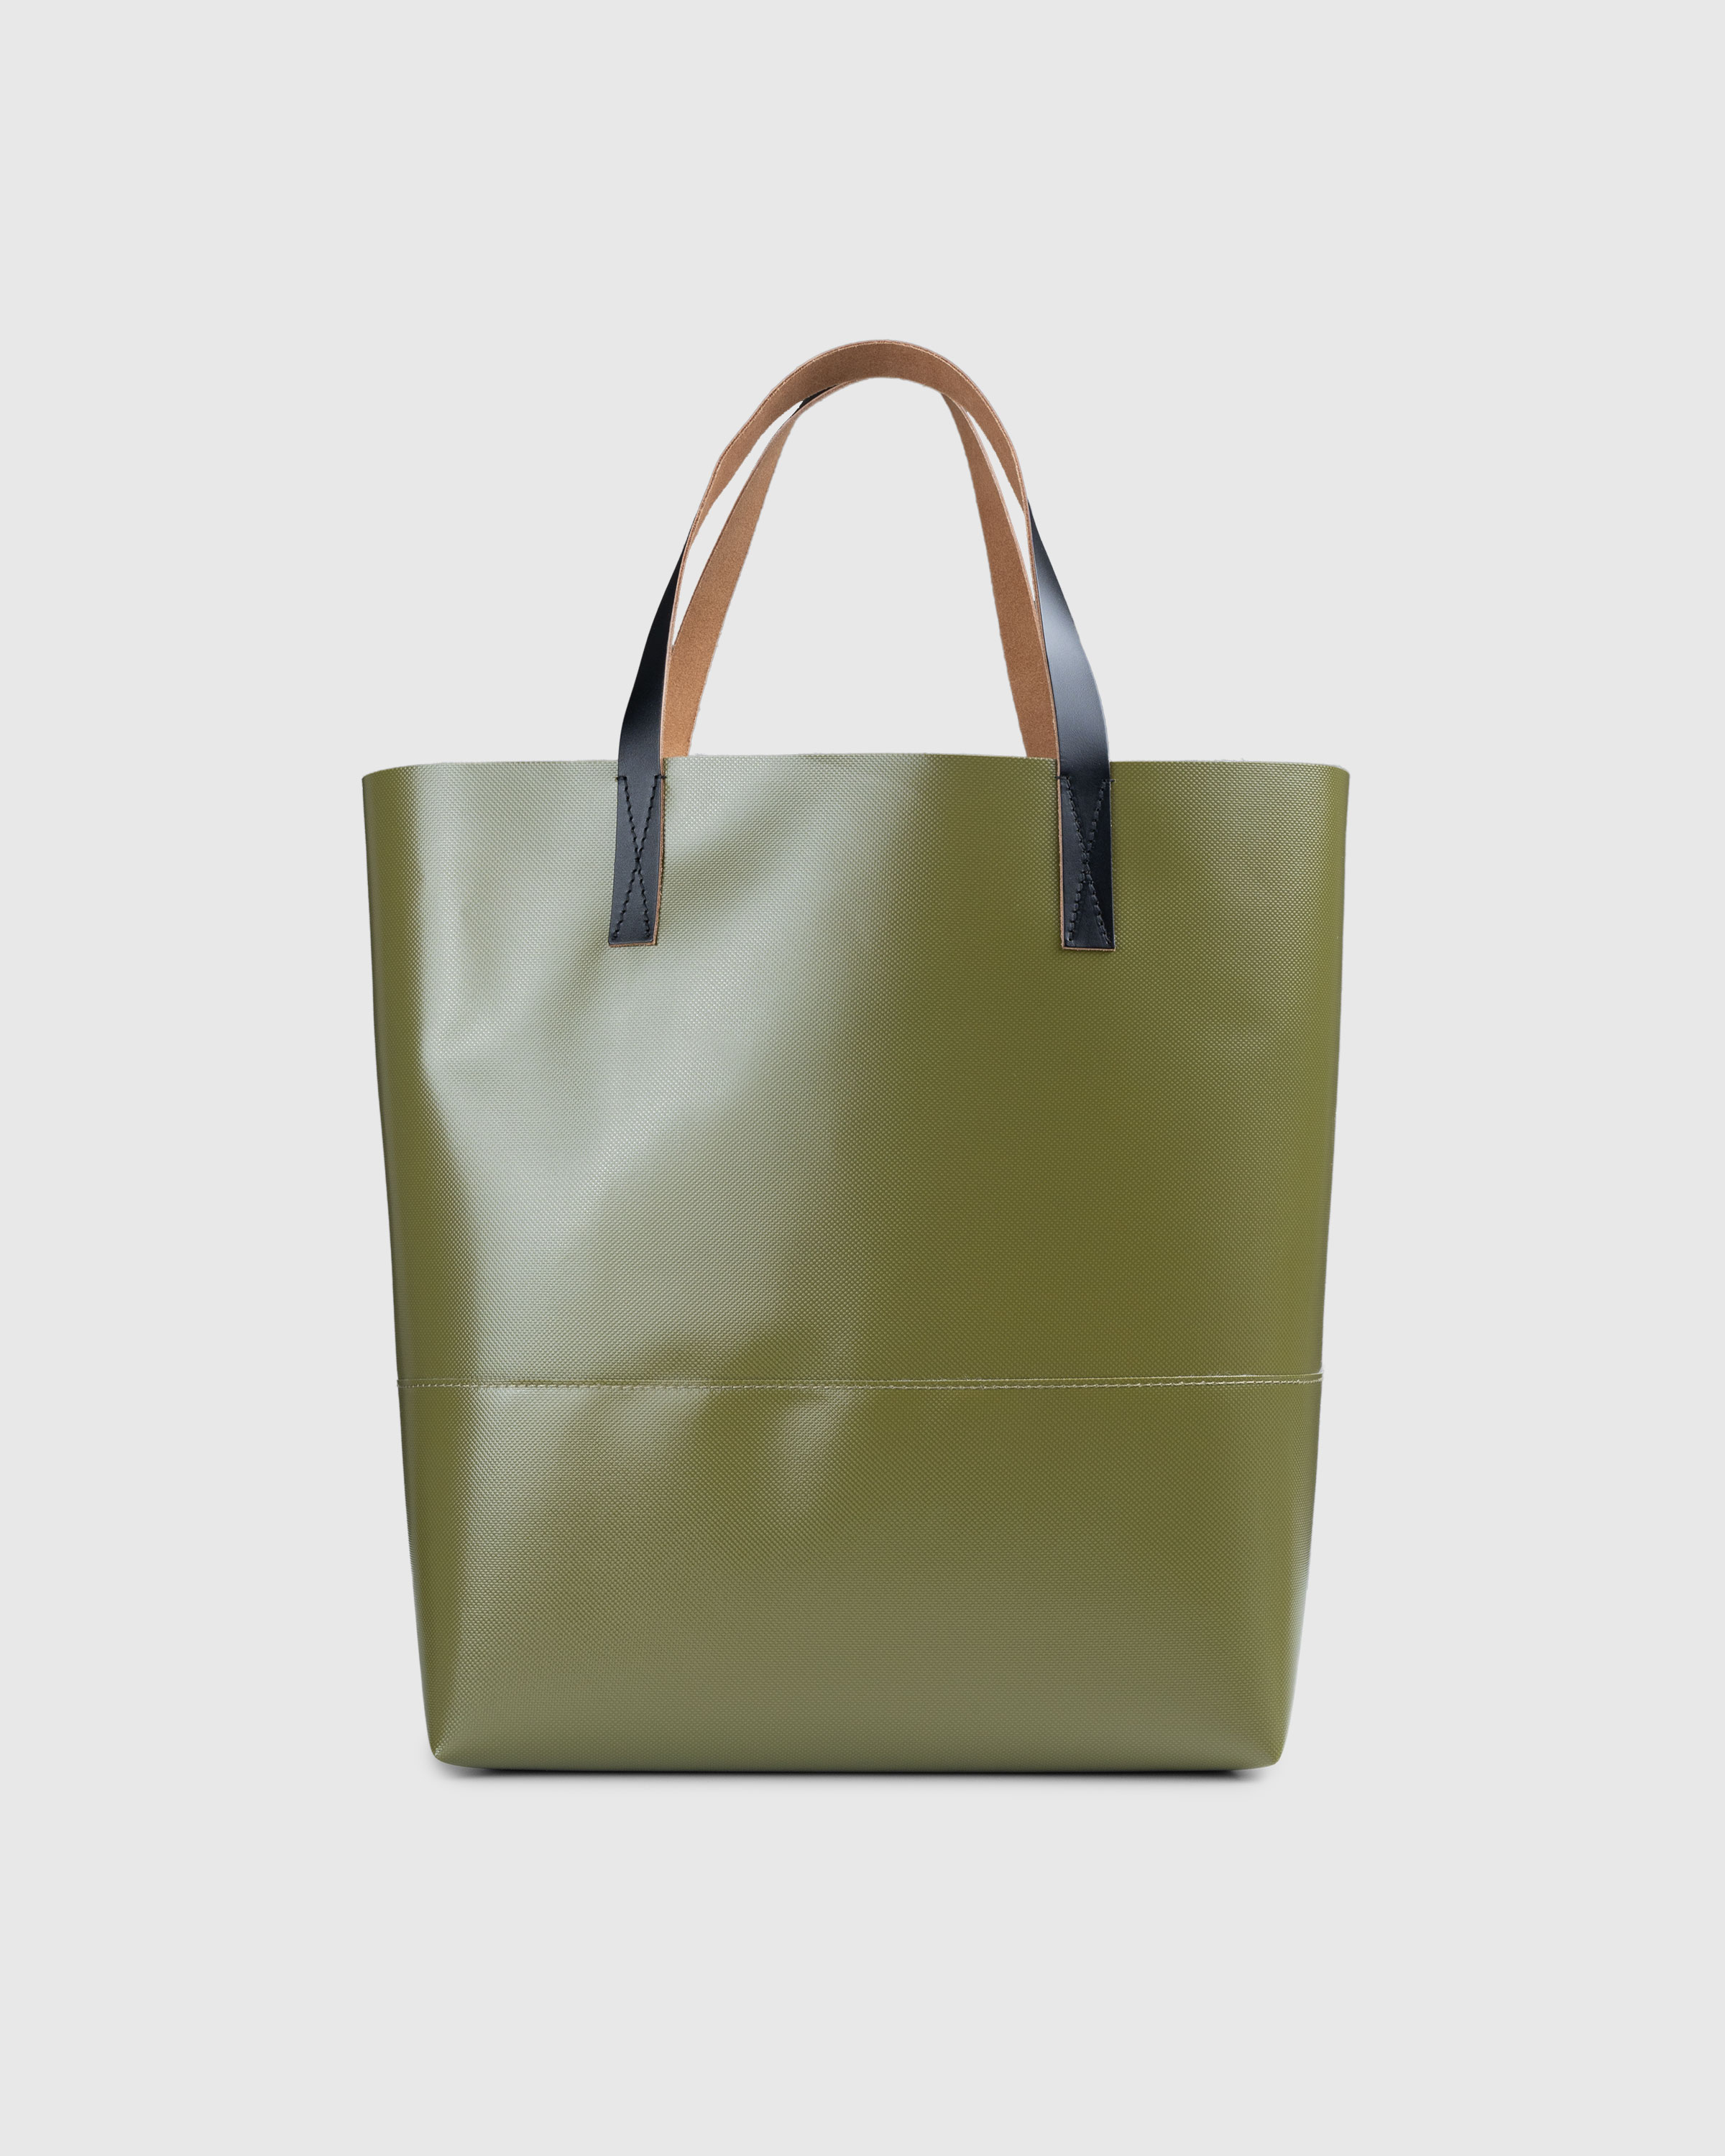 Marni - Tote Bag Olive Green - Accessories - Green - Image 3